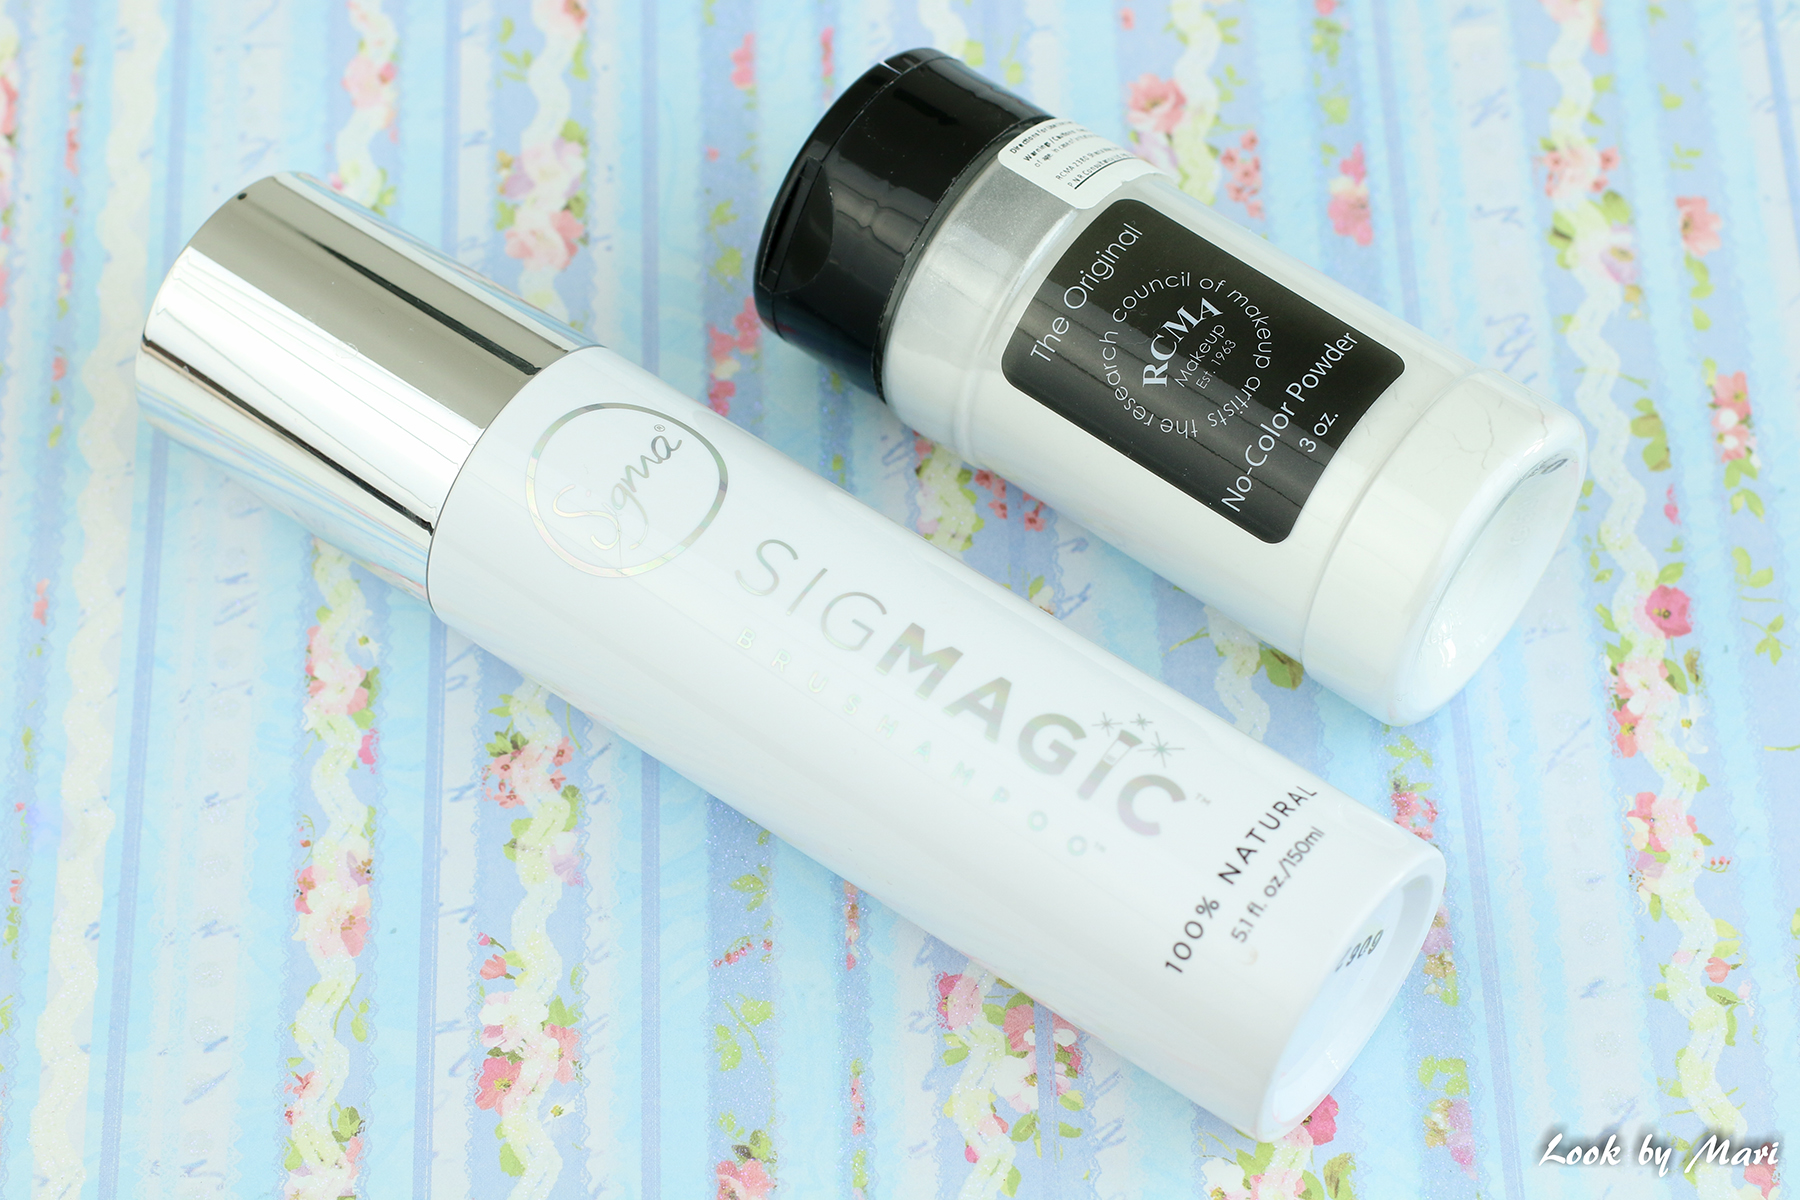 2 sigma sigmagic brush shampoo cleanser beautybay review rcma no-color powder kokemuksia